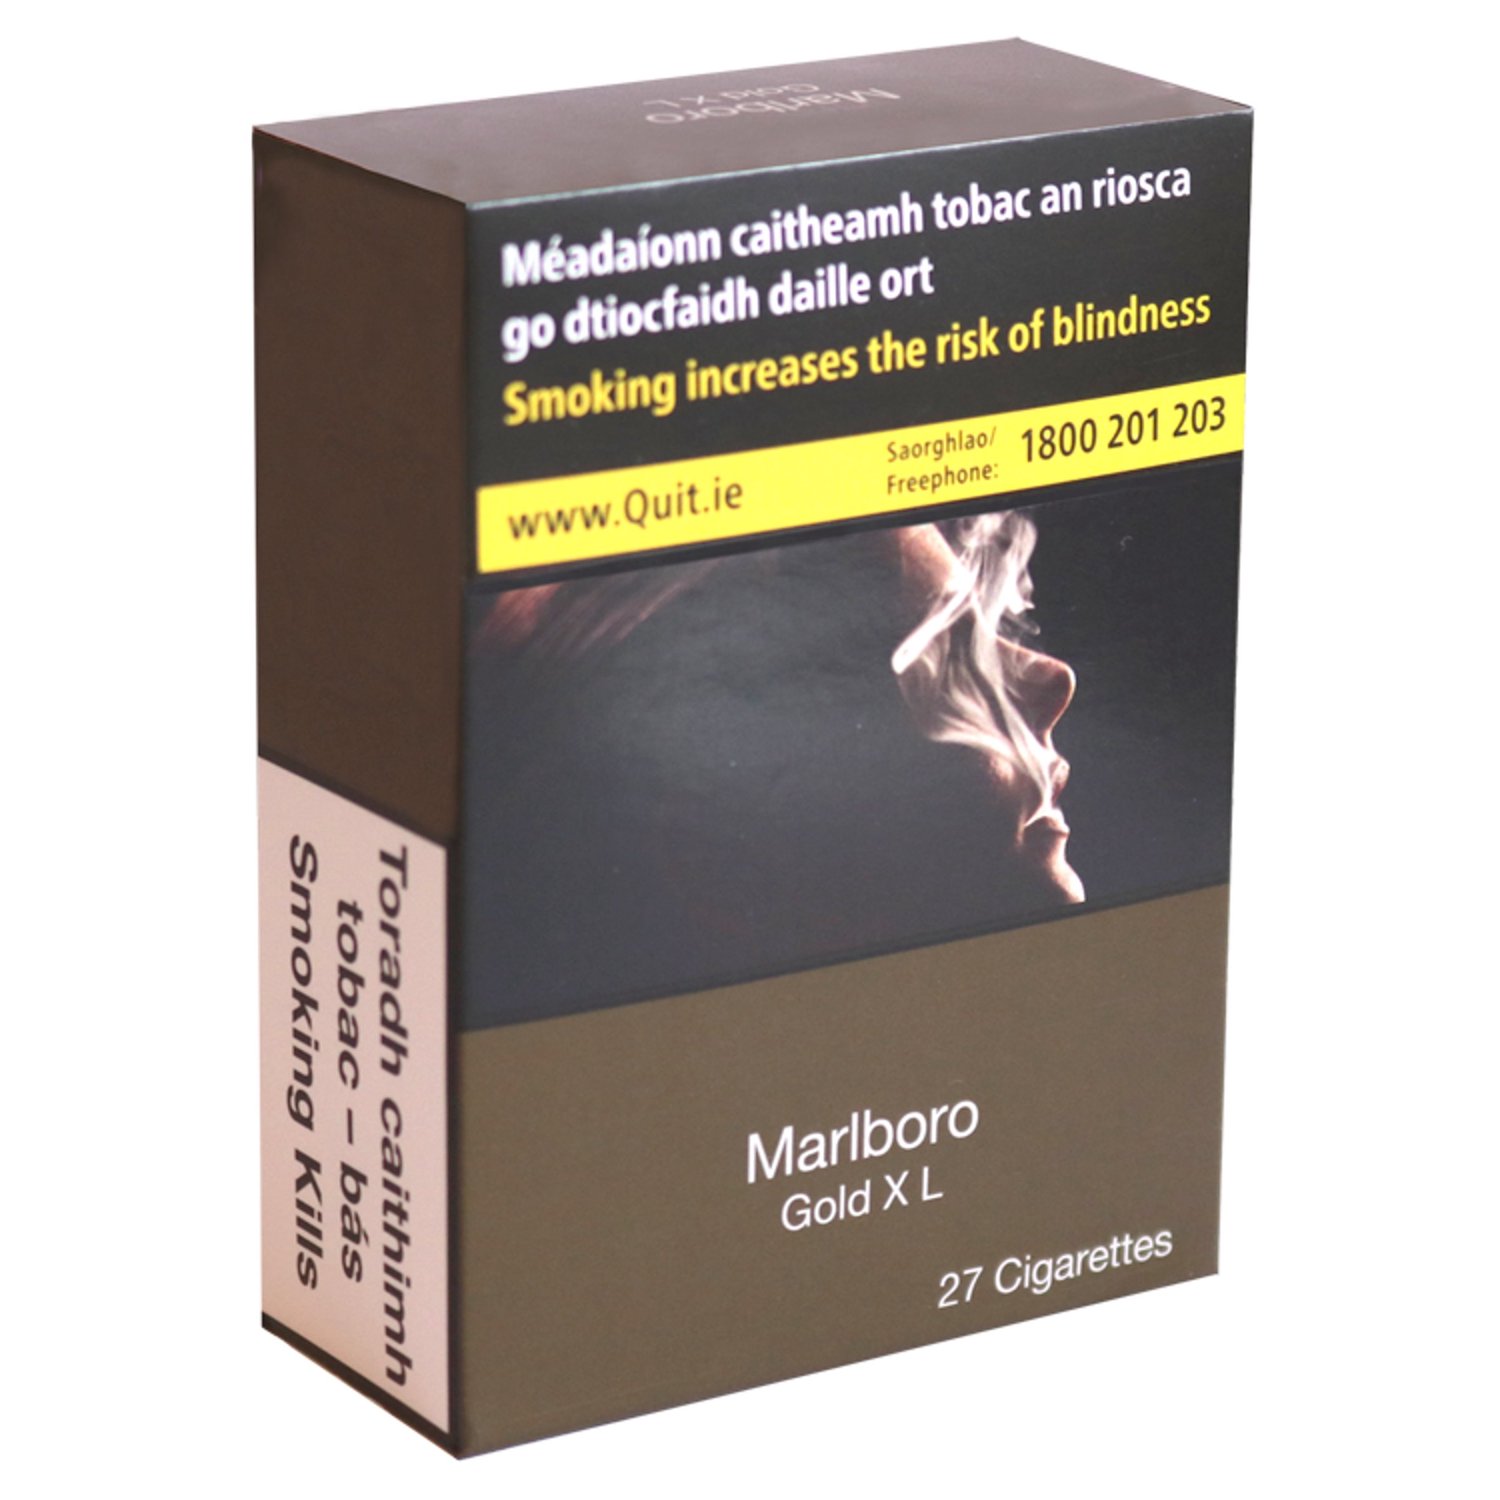 8,00 € Marlboro Mix XL